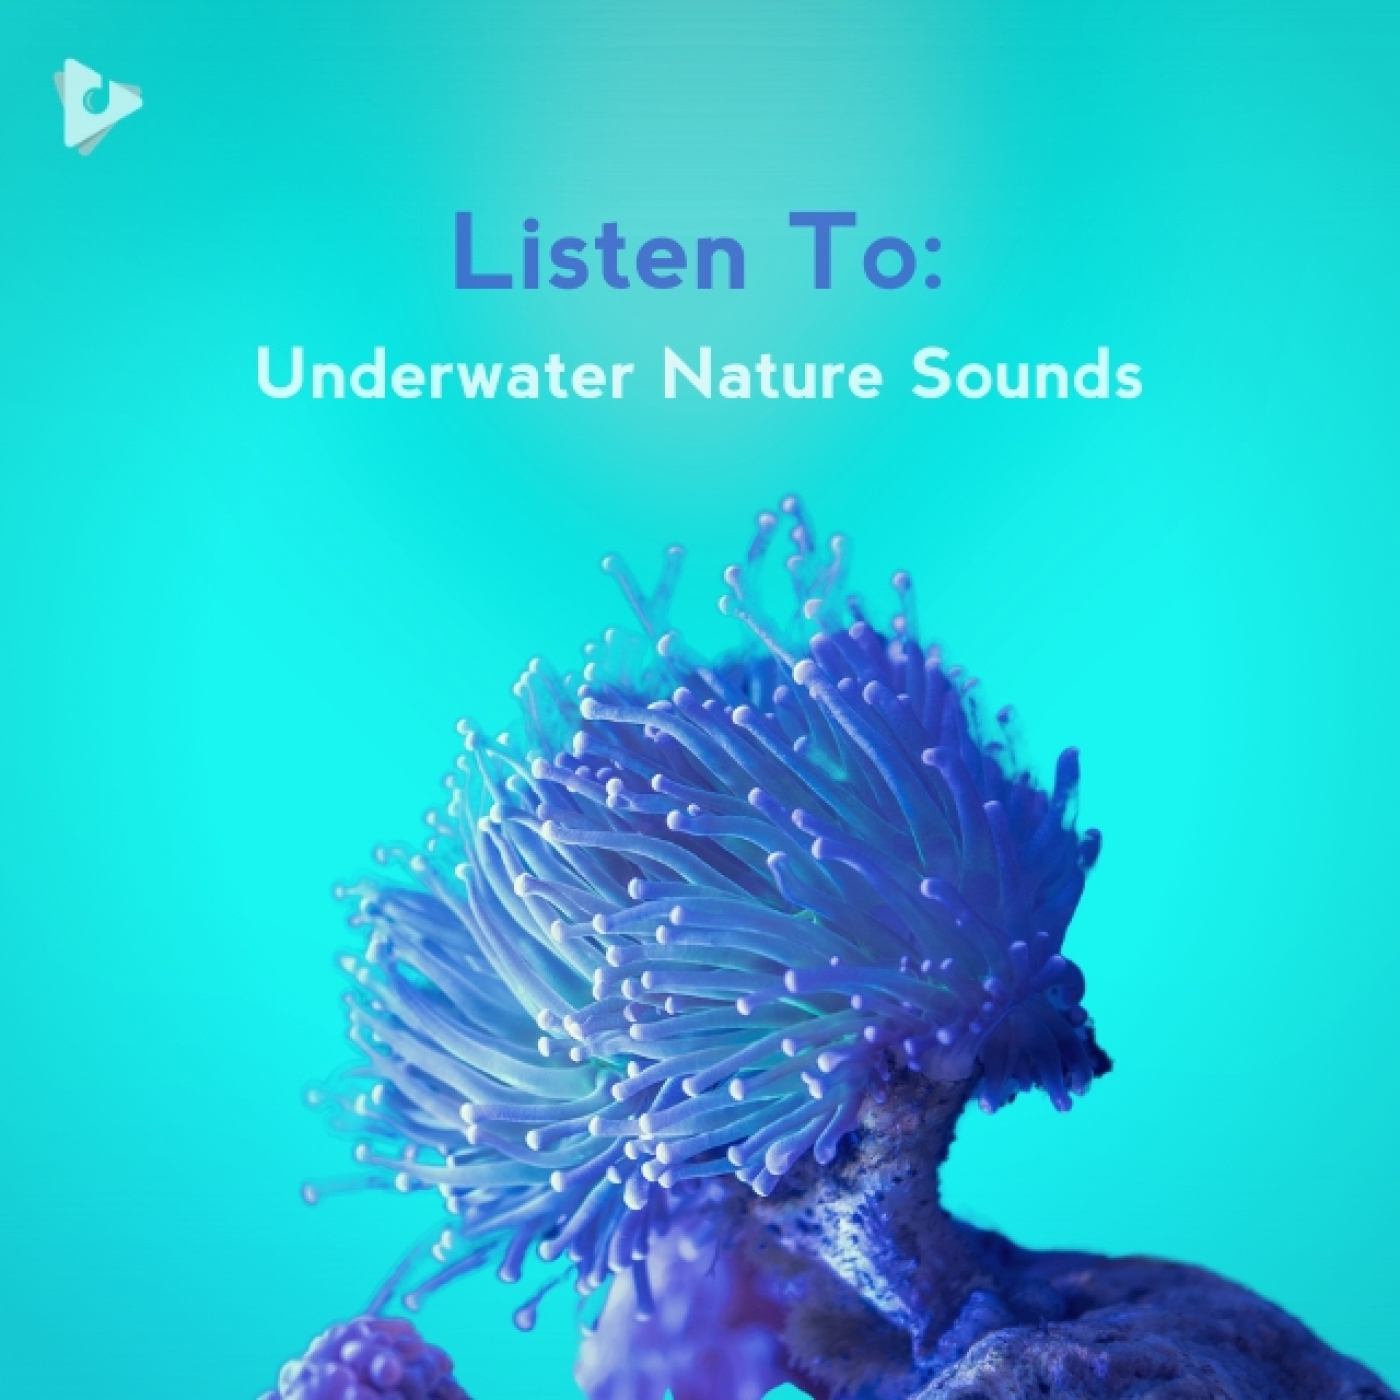 Listen To: Underwater Nature Sounds